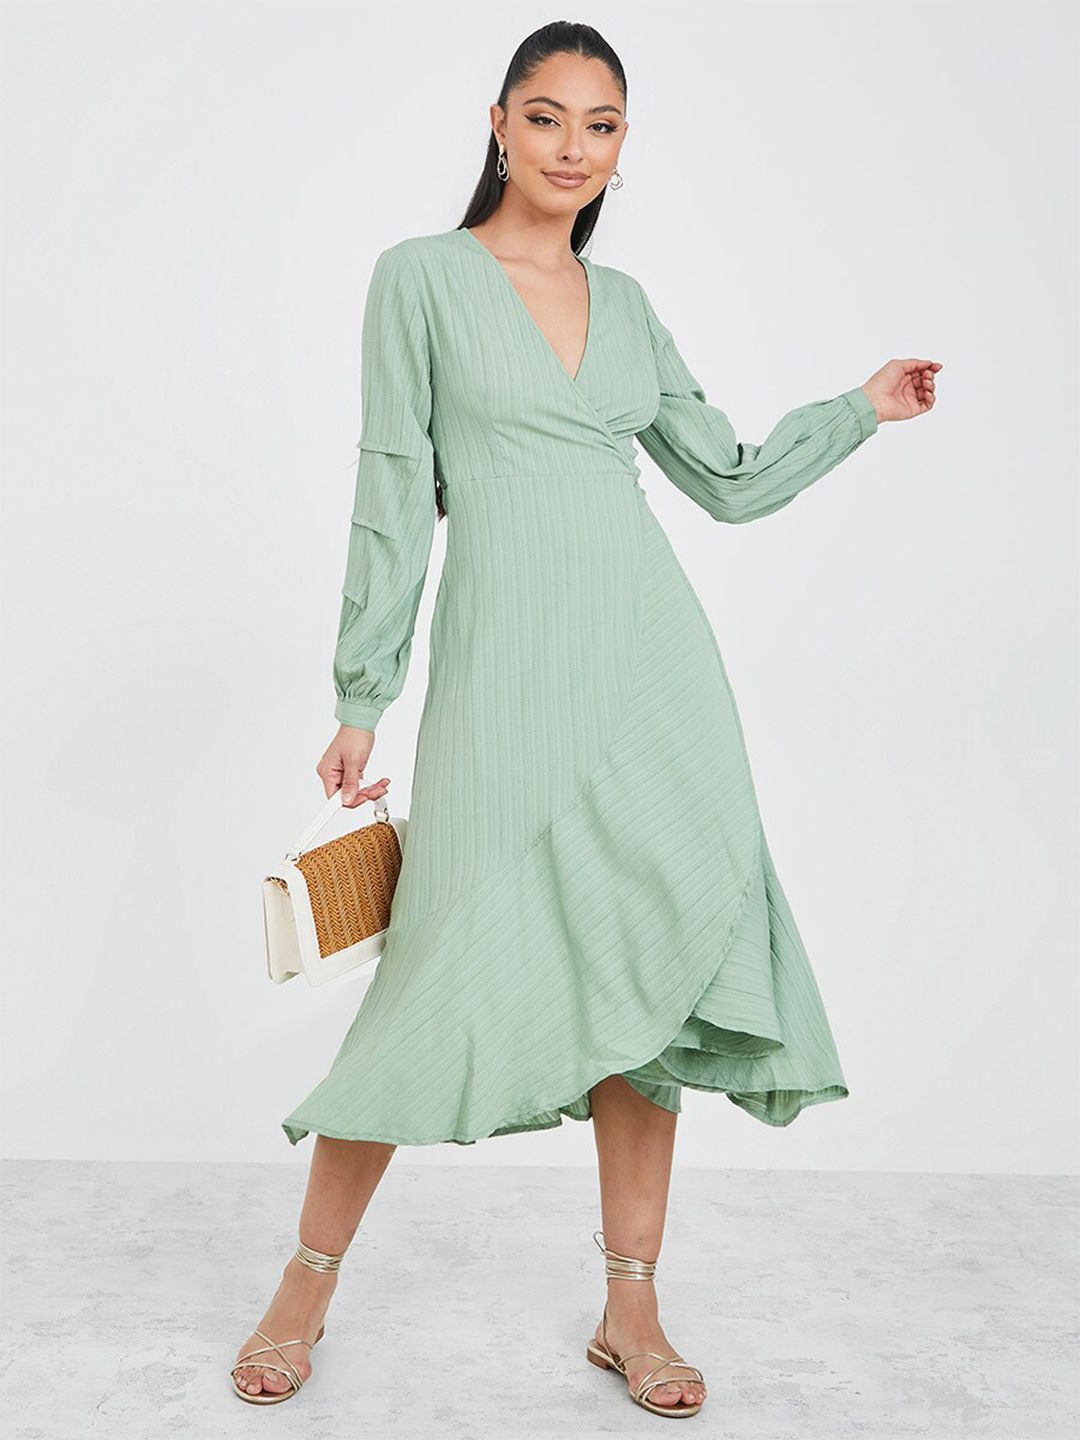 Styli Green Striped Midi Dress Price in India